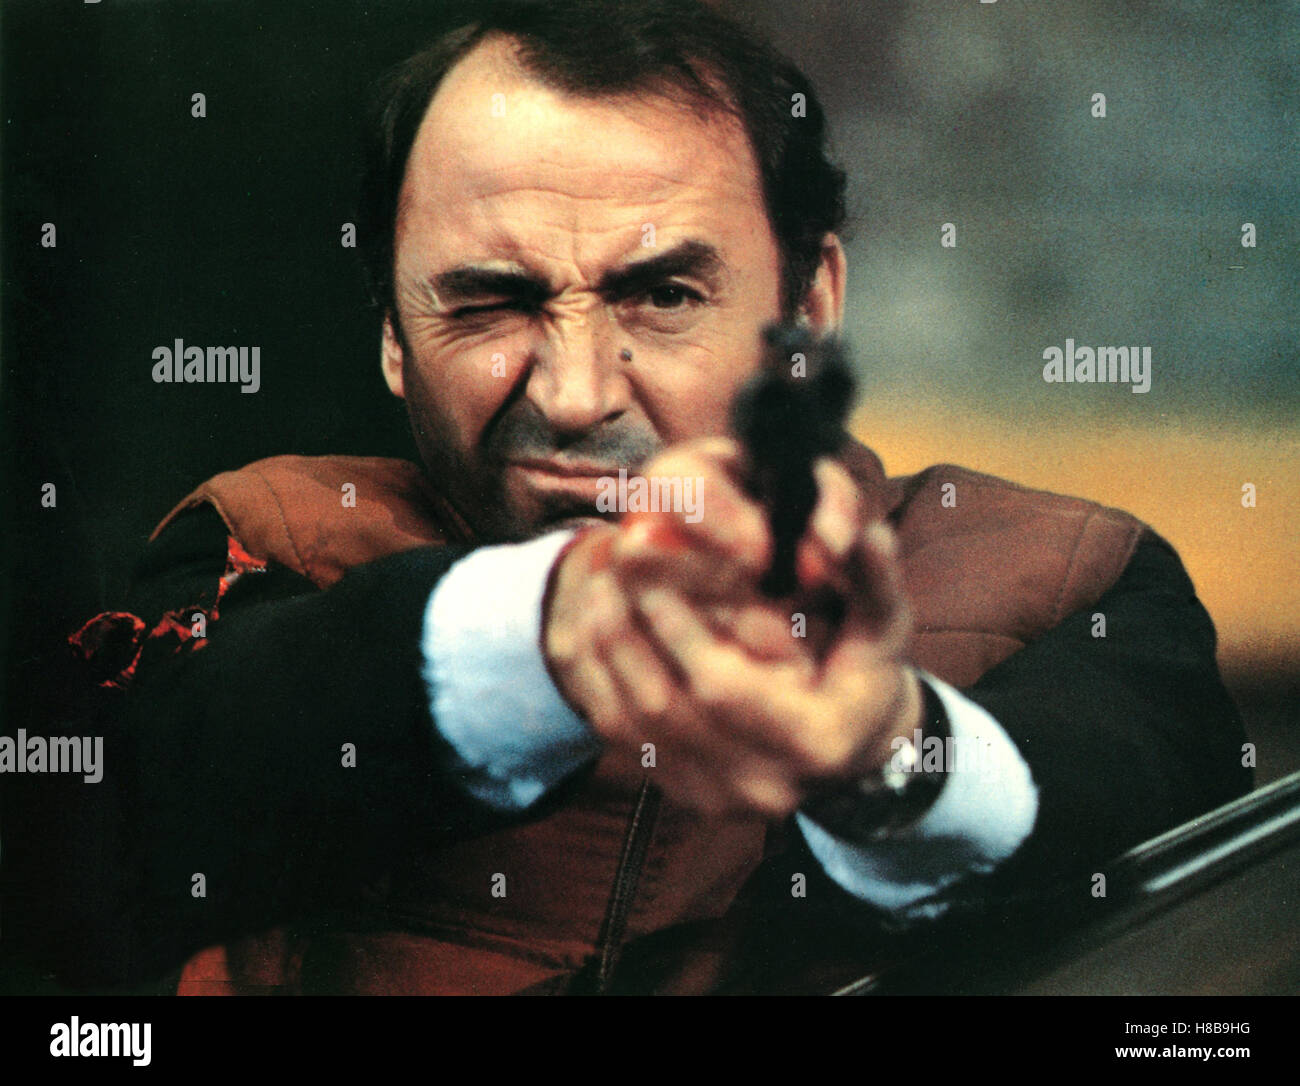 Wespennest, (LA CRIME) F 1983, Regie: Philippe Labro, CLAUDE BRASSEUR, Key: Kommissar, Waffe, Revolver, Zielen, Stock Photo